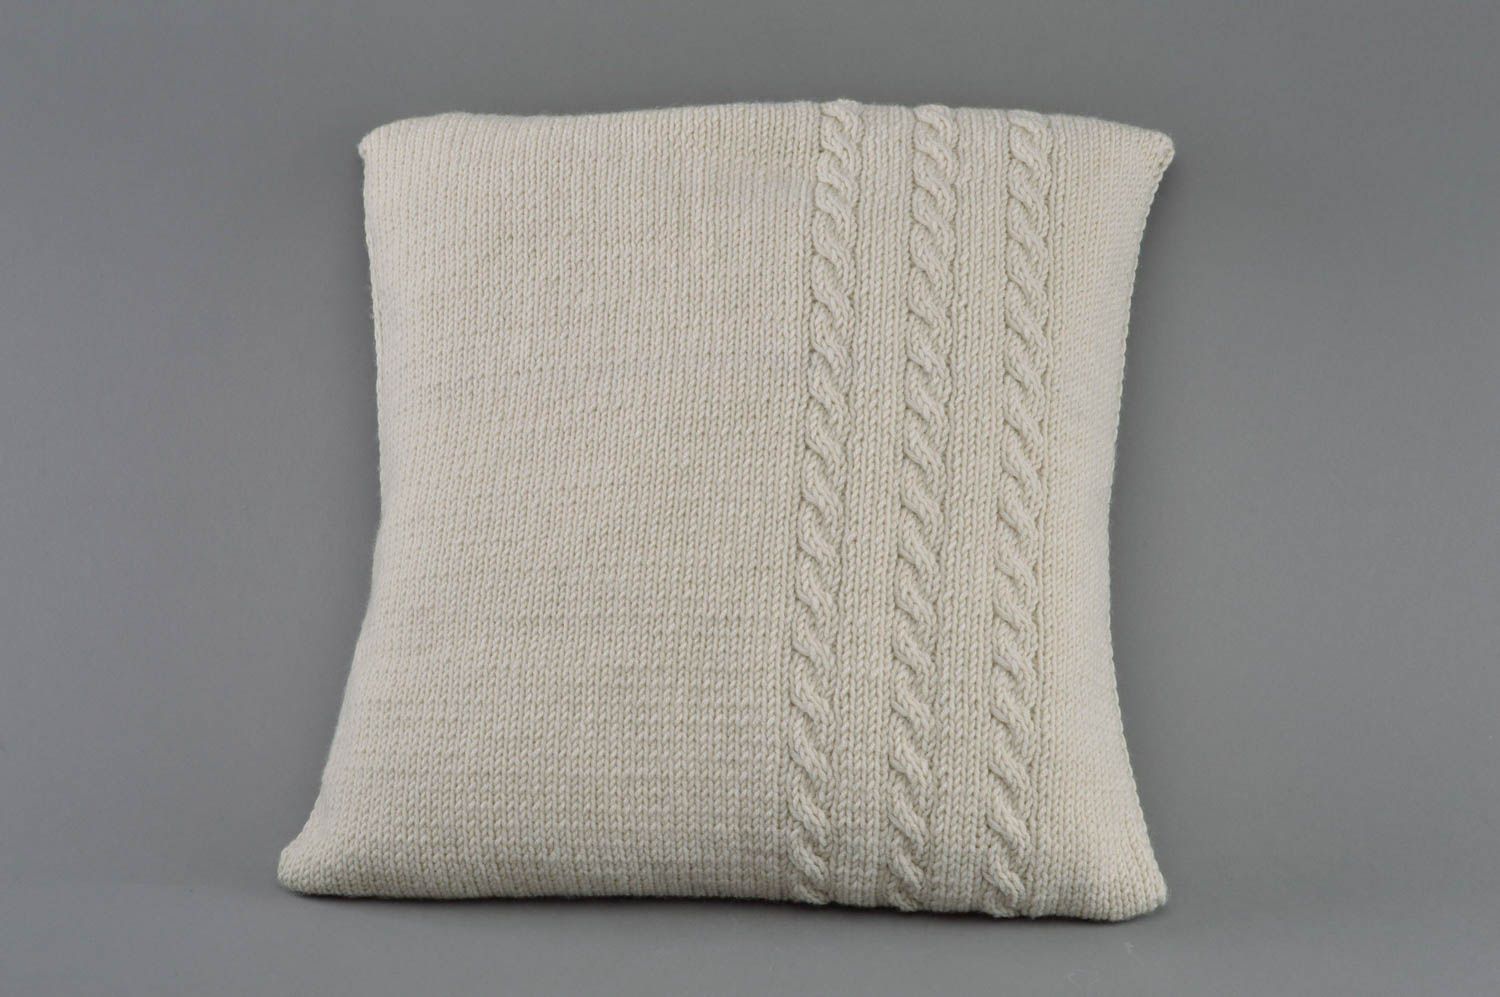 Handmade knitted interior decorative white soft cushion for home interior photo 2